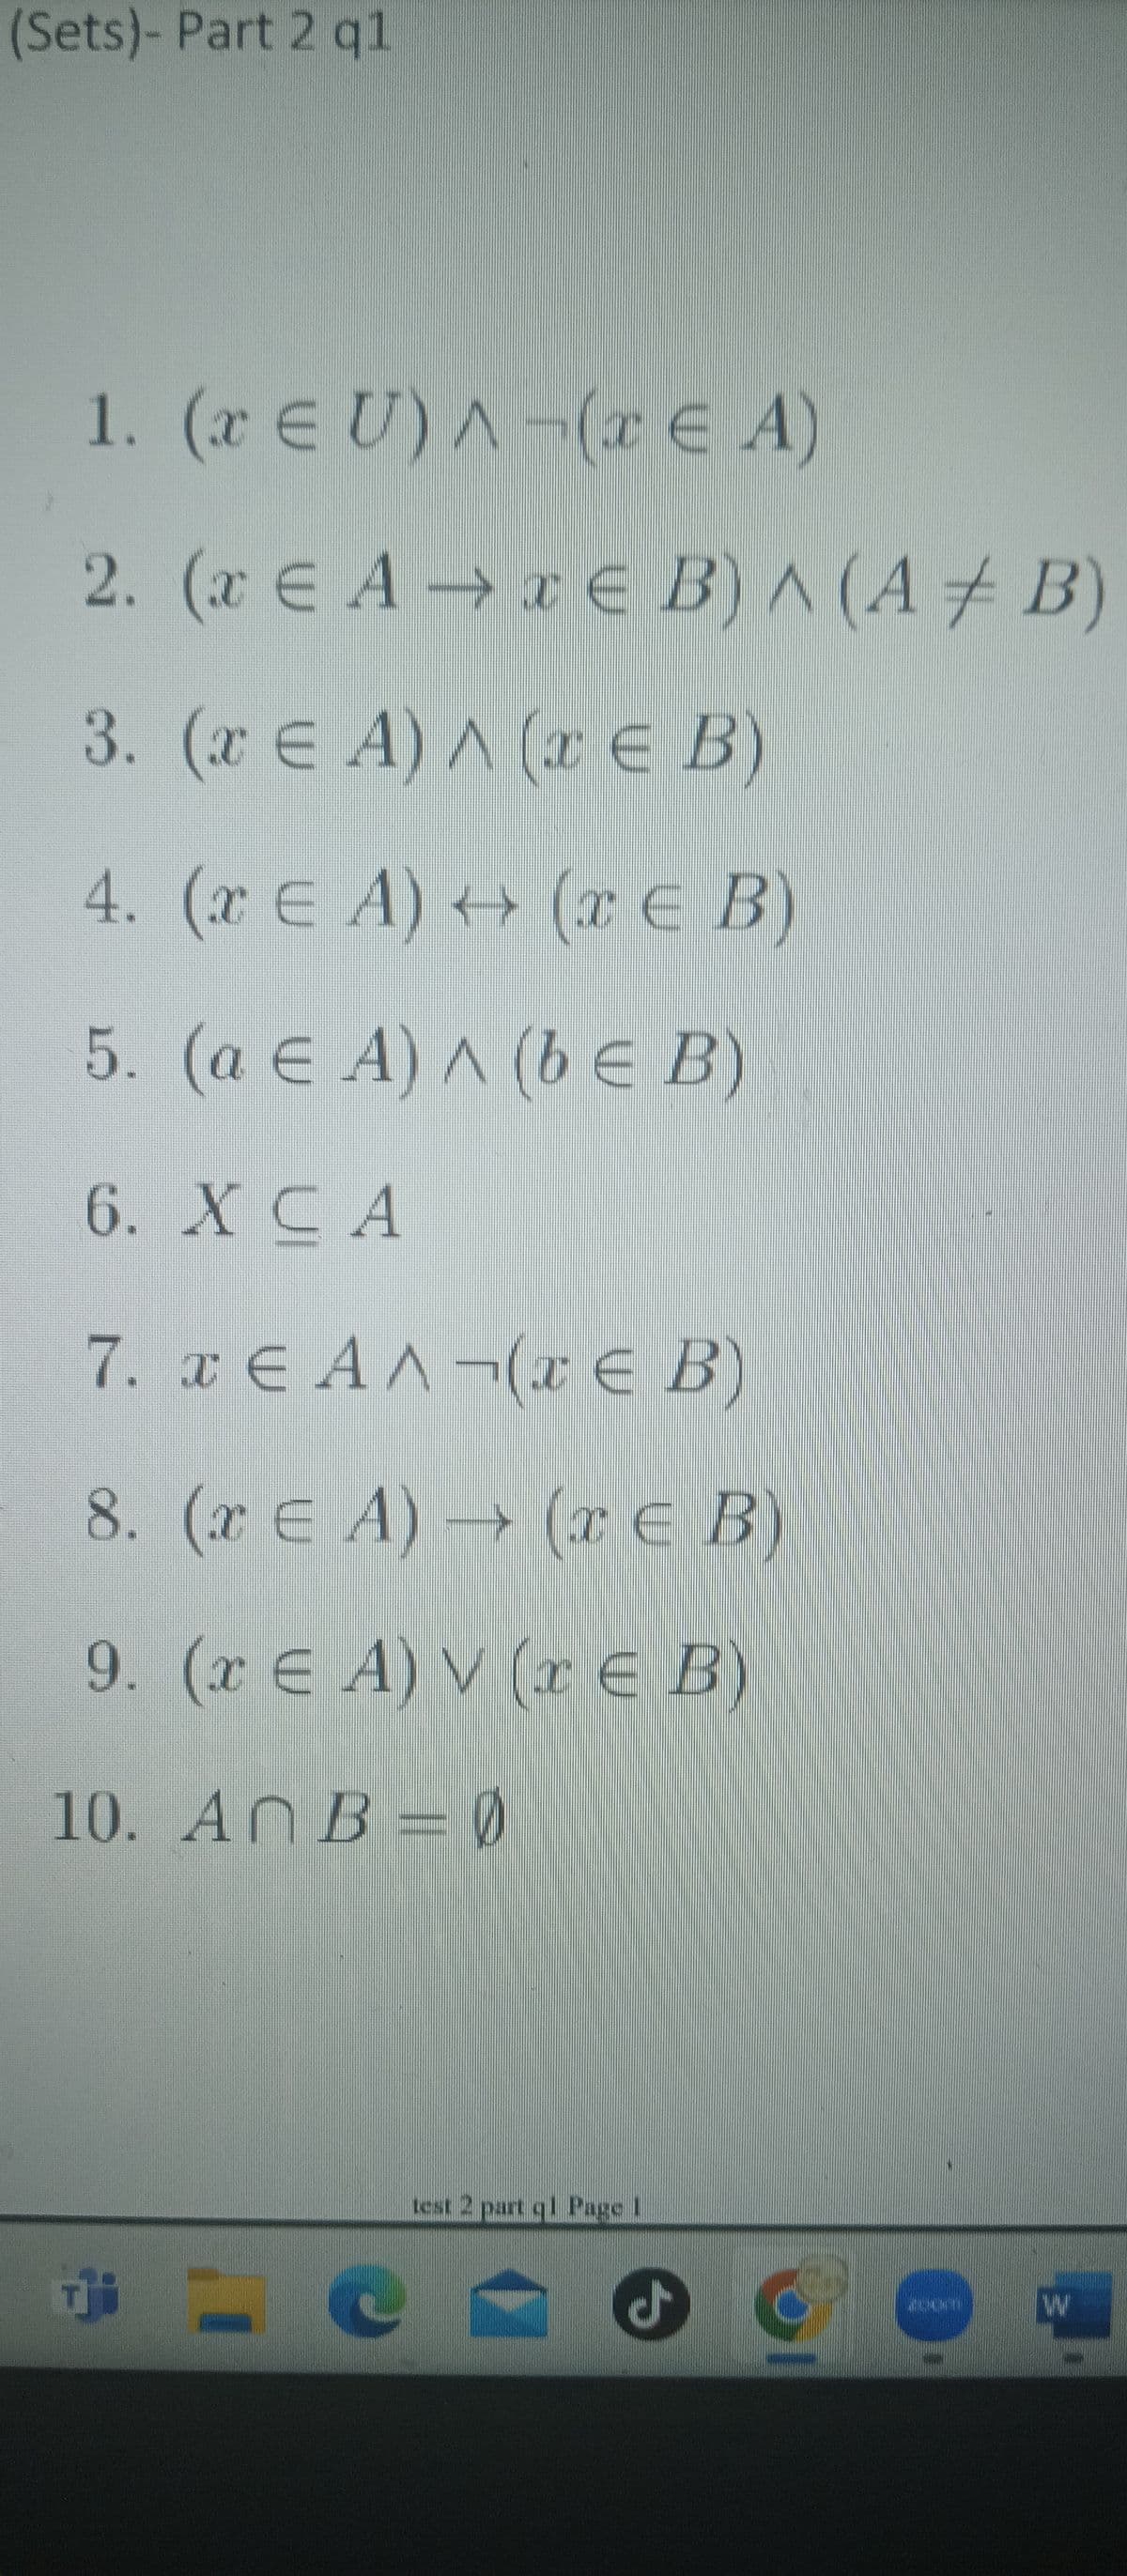 (Sets)- Part 2 q1
1. (x Є U)^(EA)
€ A-
2. (x AxЄ B) A (AB)
3. (x = A) A (x ЄE B)
4. (2 € A) + (x ∈ B)
5. (a Є A) ^ (b E B)
6. X CA
7. x ЄAA¬(x Є B)
8. (x = A) (x Є B)
9. (x Є A) V (x Є B)
10. AnB = 0
test 2 part q1 Page 1
ـل
WW